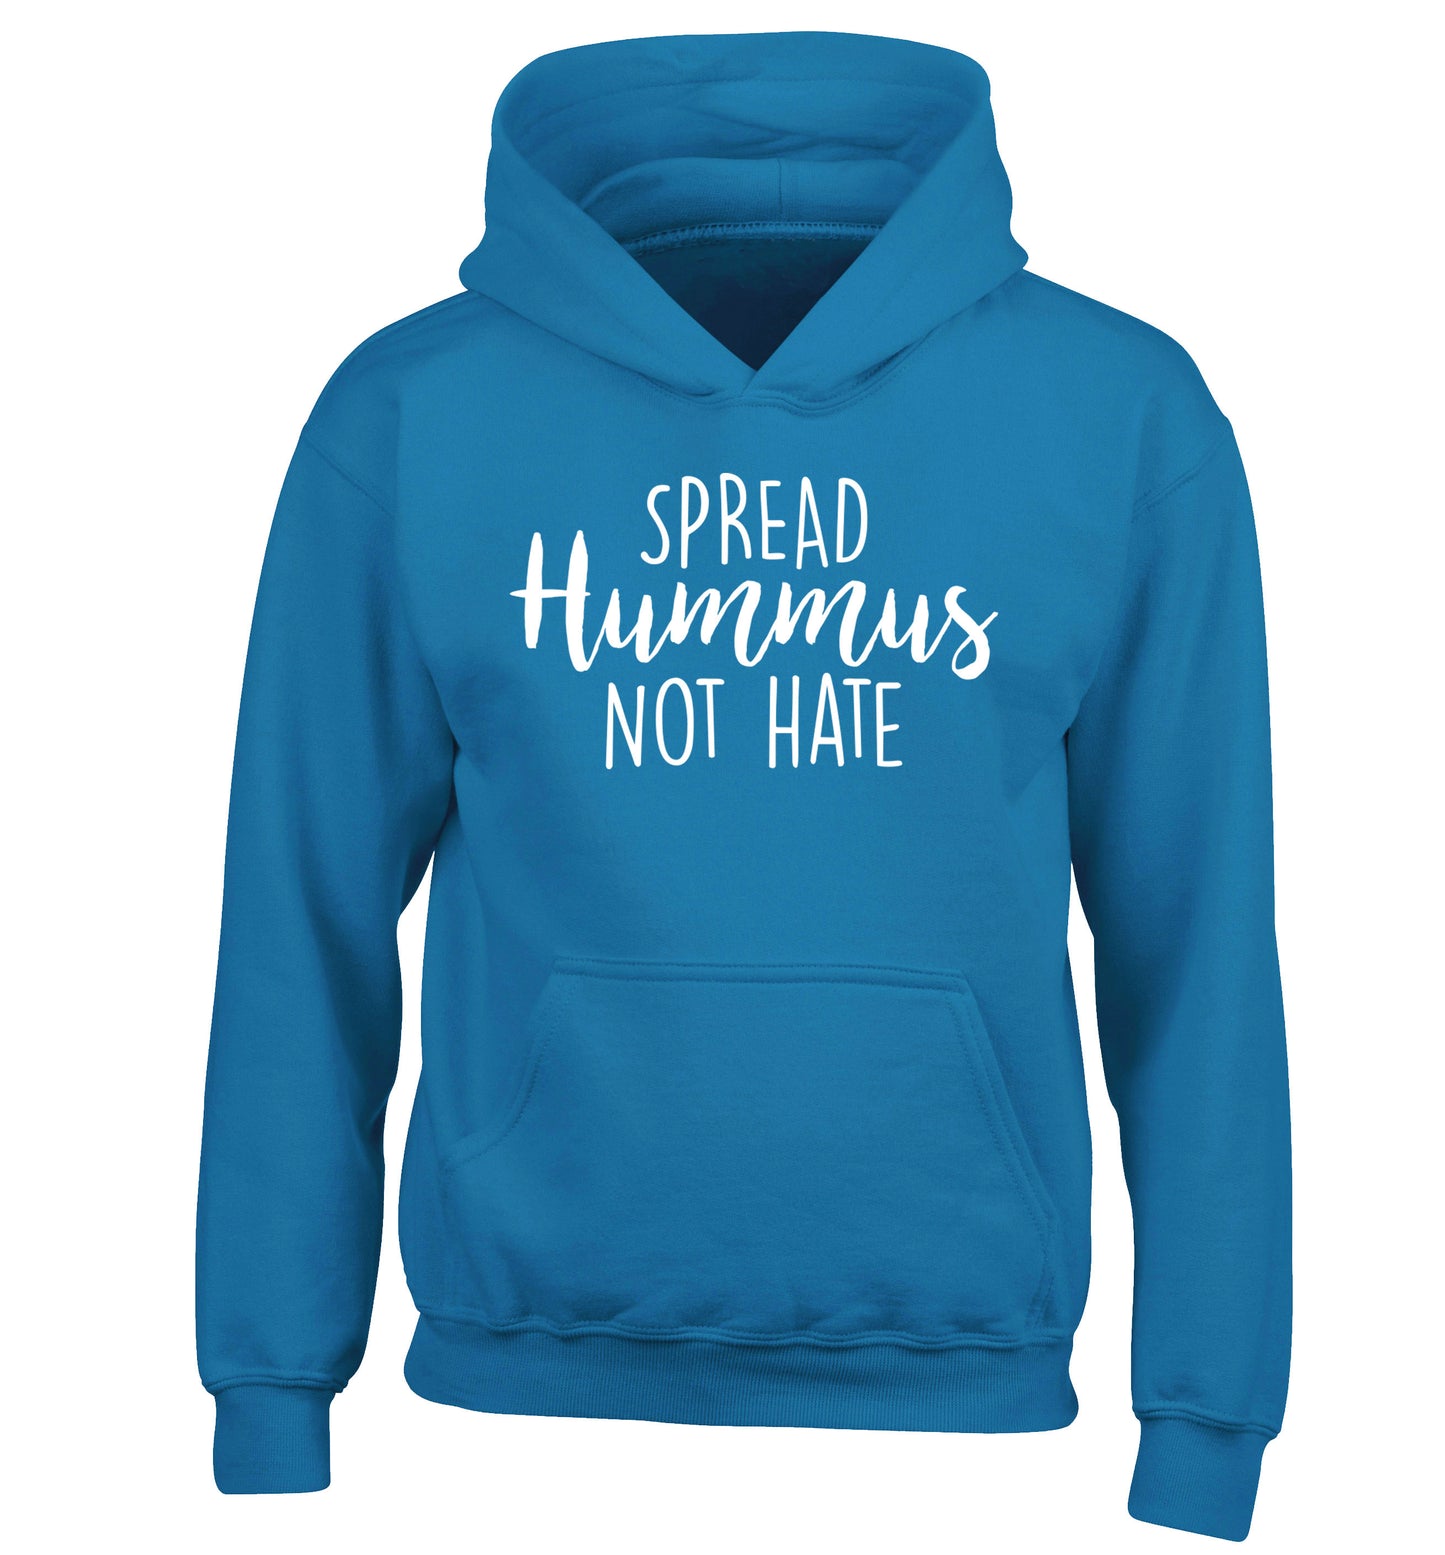 Spread hummus not hate script text children's blue hoodie 12-14 Years